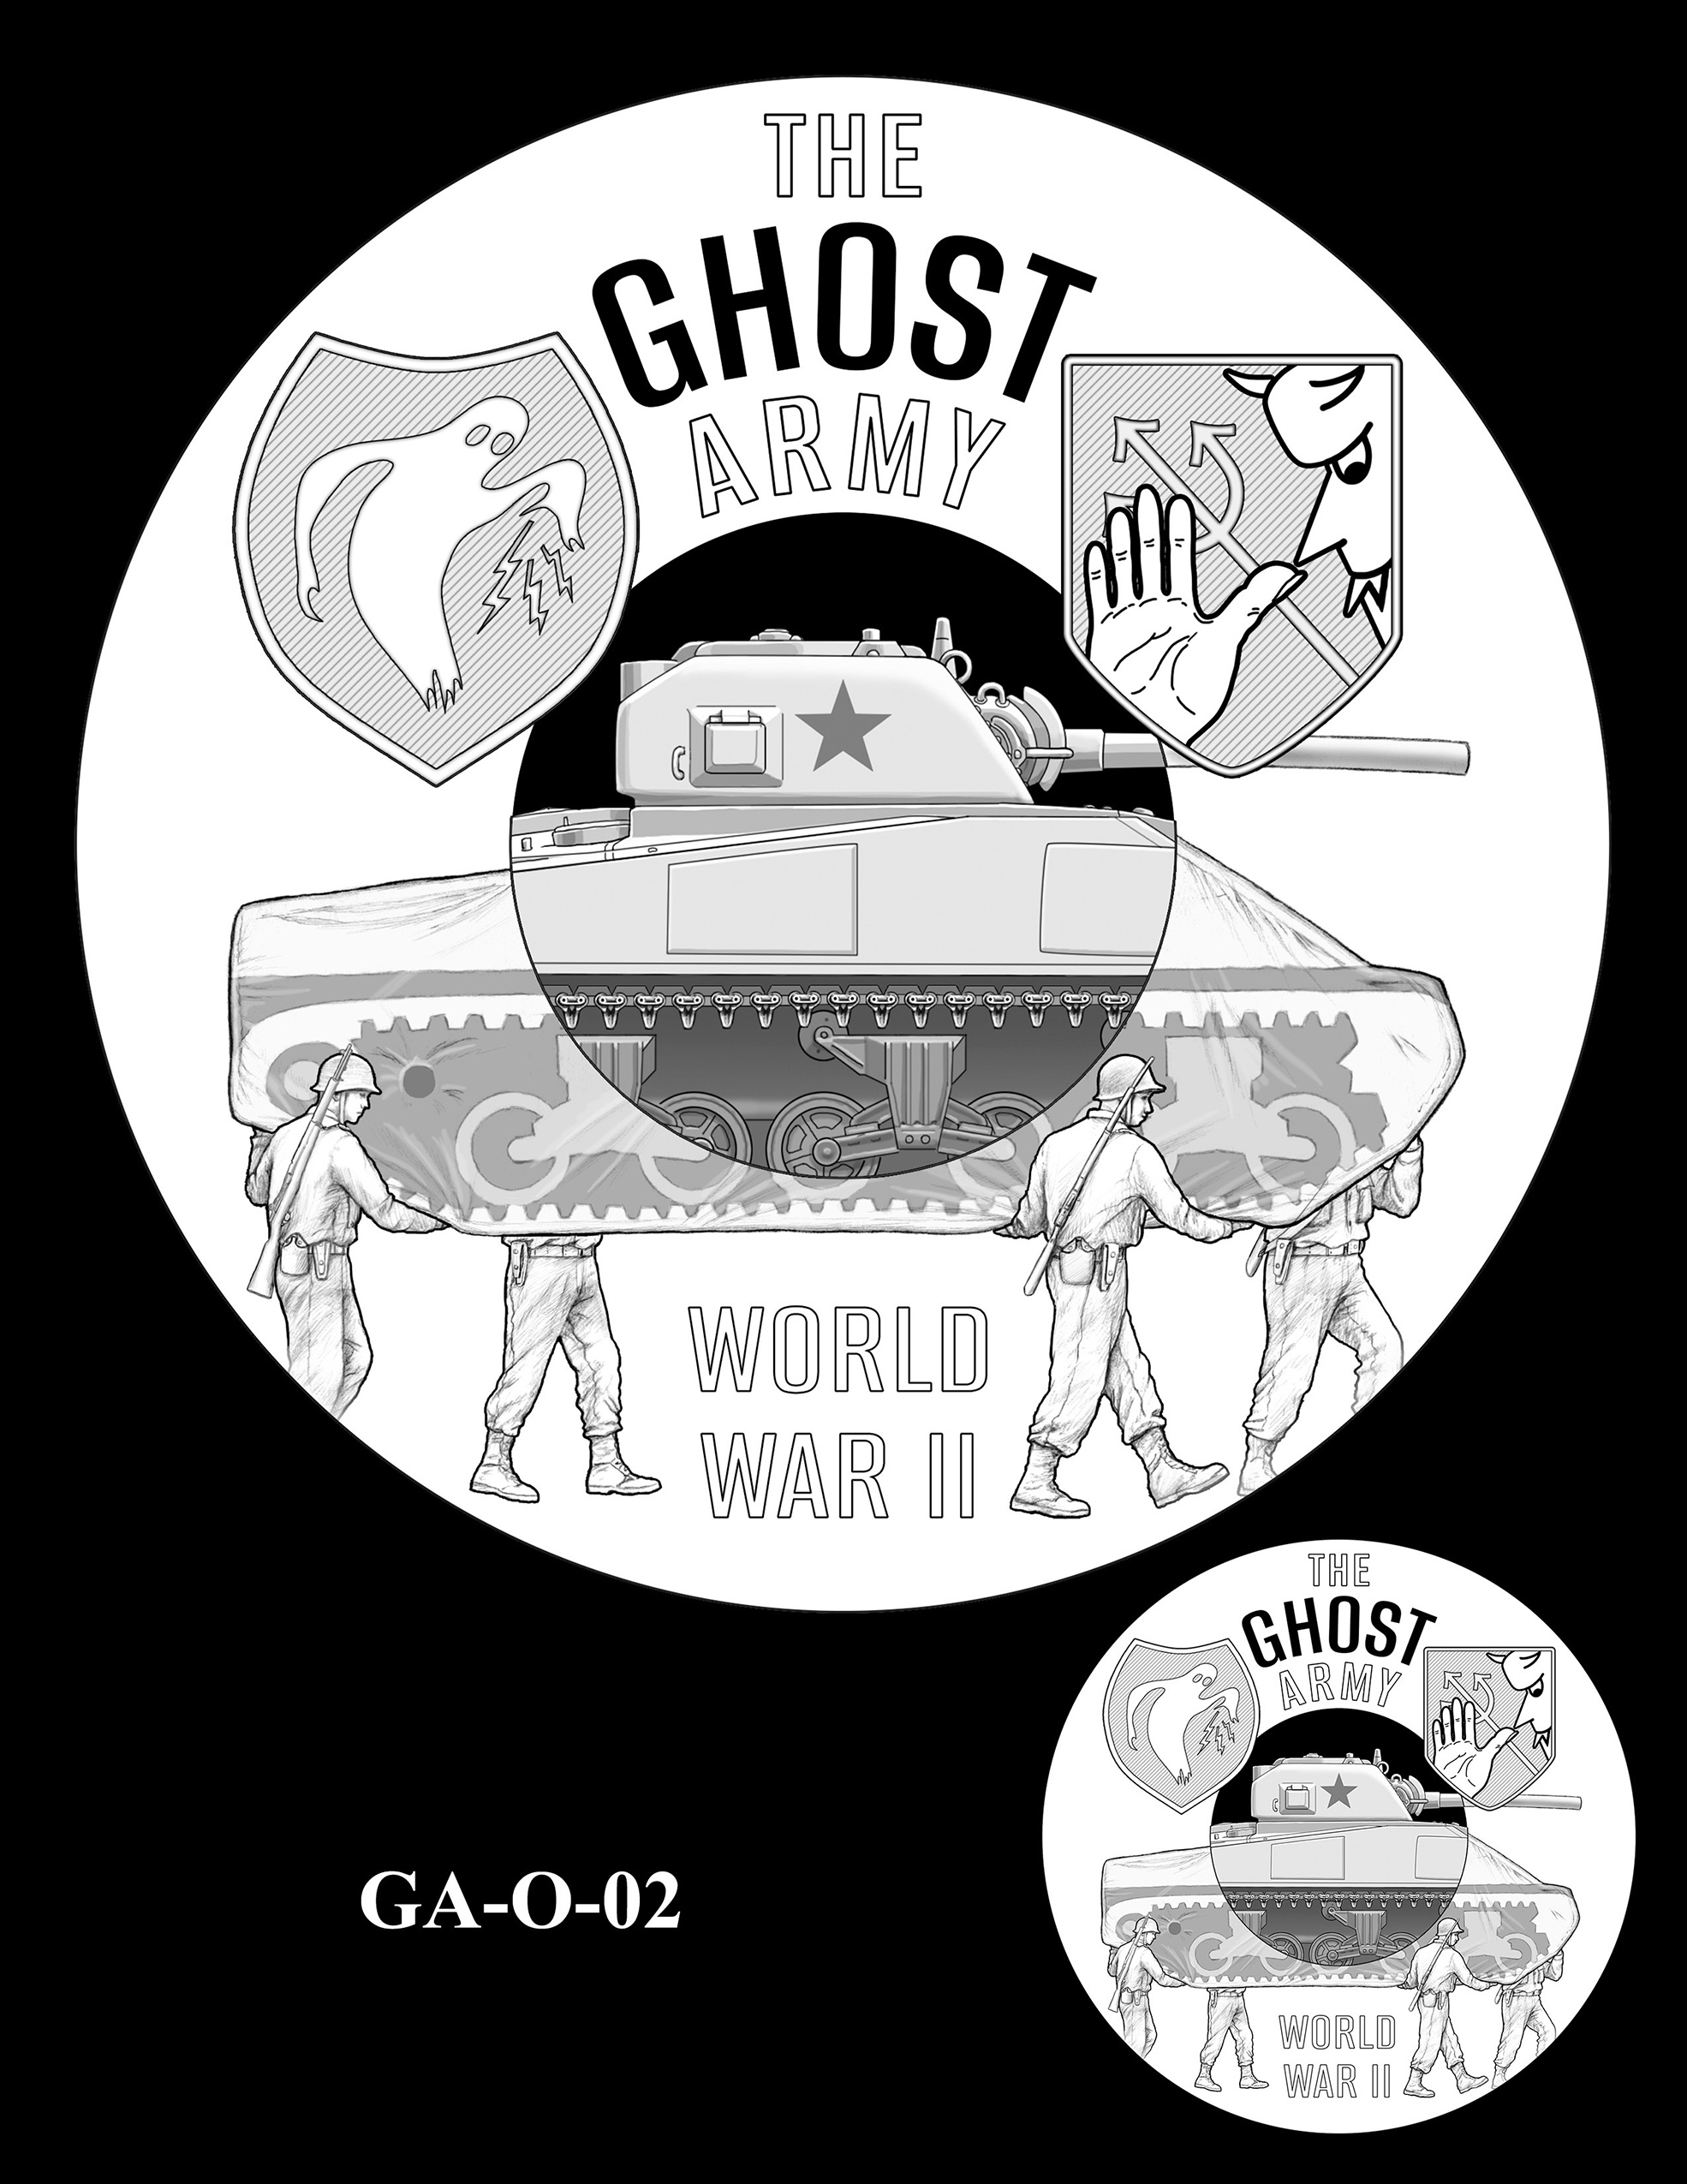 GA-O-02 -- Ghost Army Congressional Gold Medal